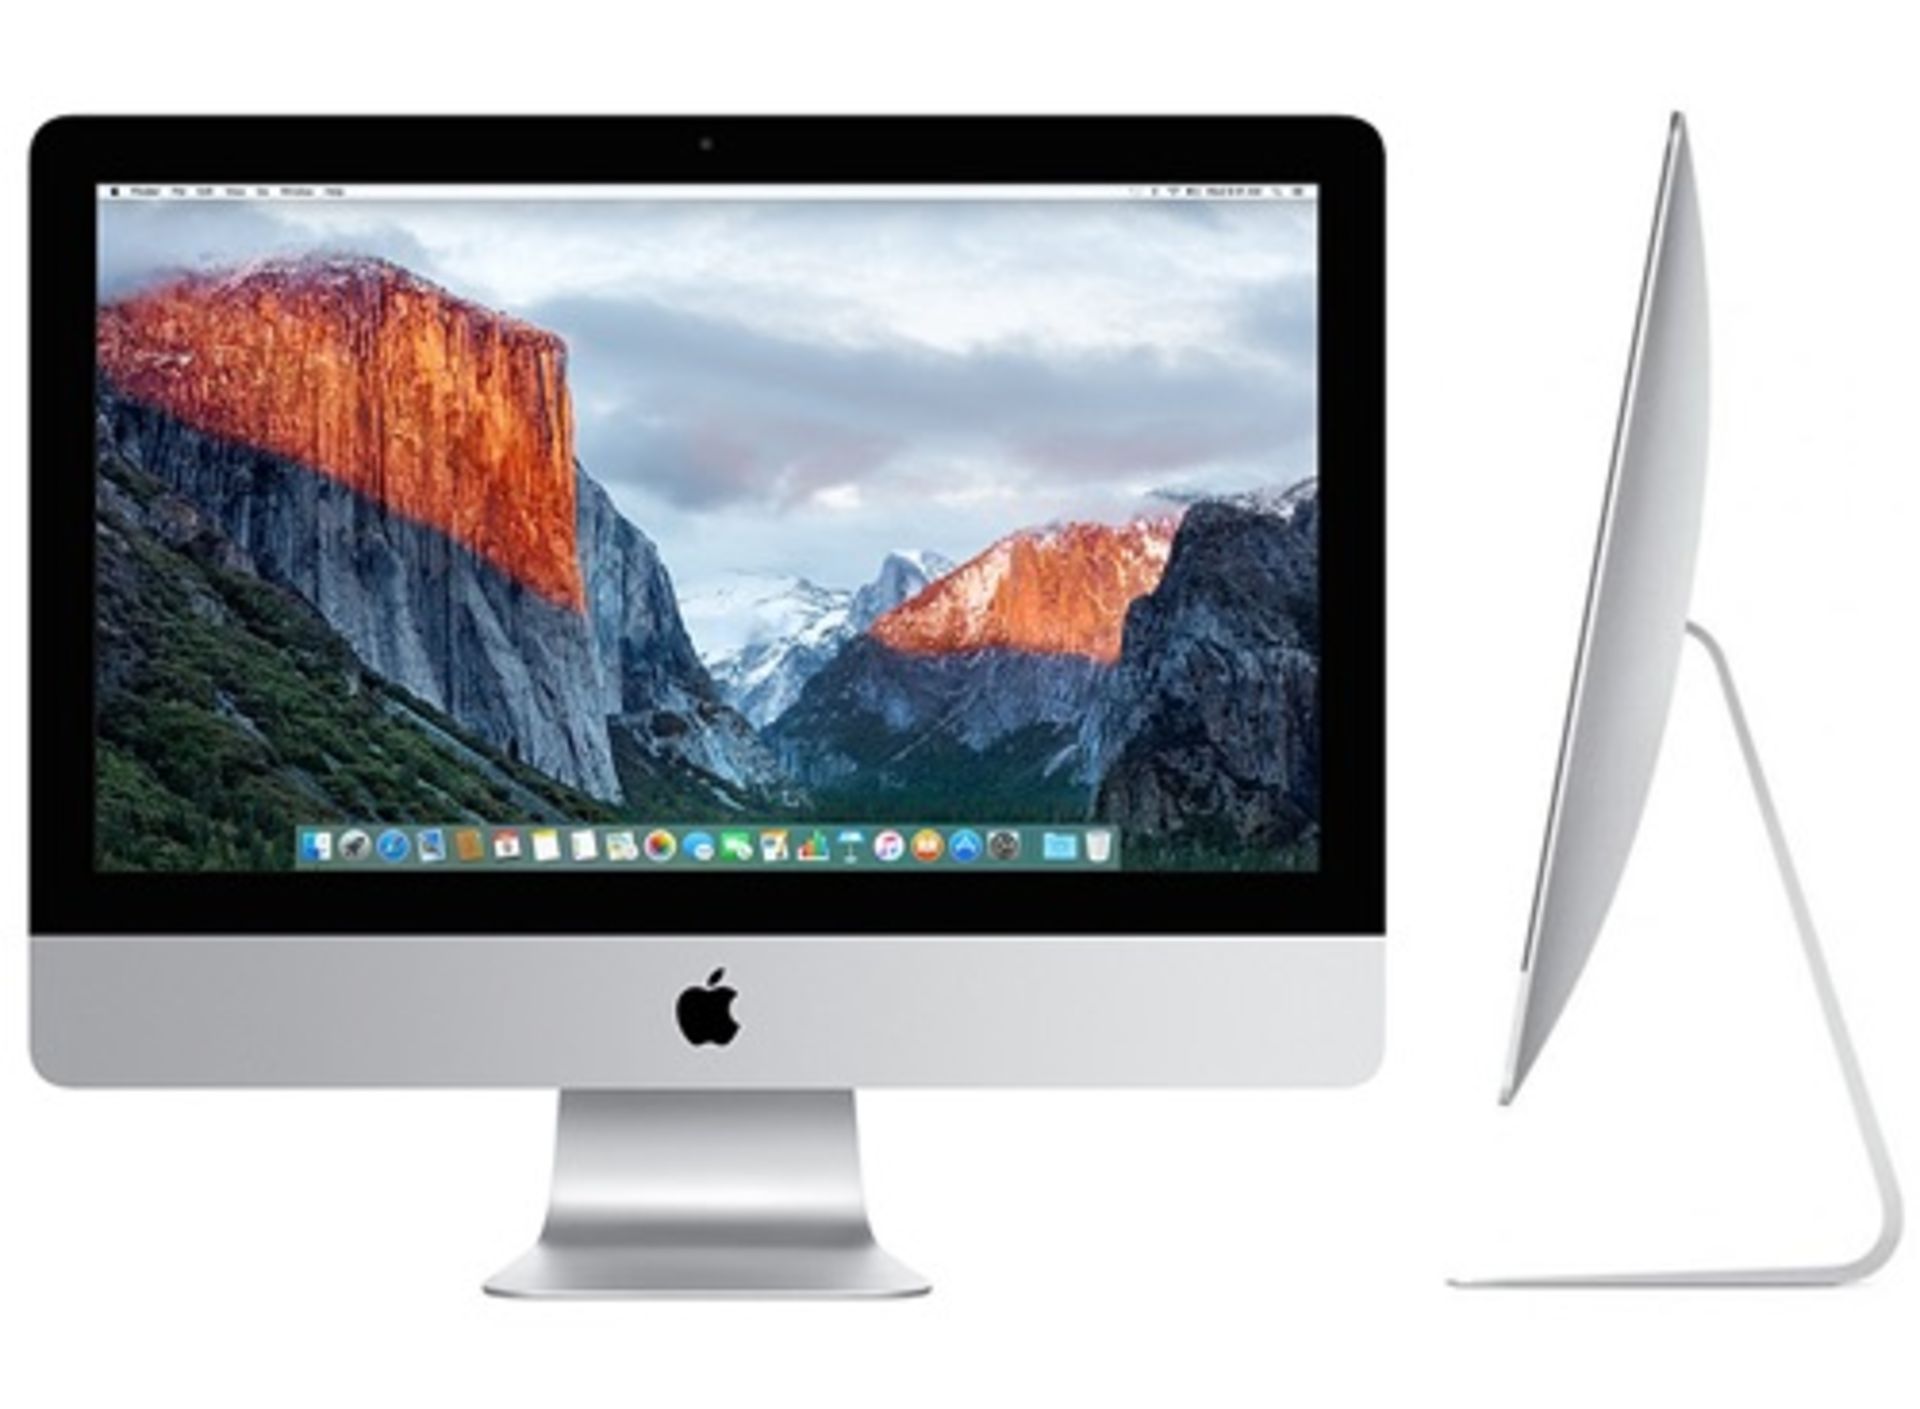 Apple iMac 21.5” A1418 (2012) OS X Catalina Intel Core i5 Quad Core 8GB Memory 1TB HD WiFi Office